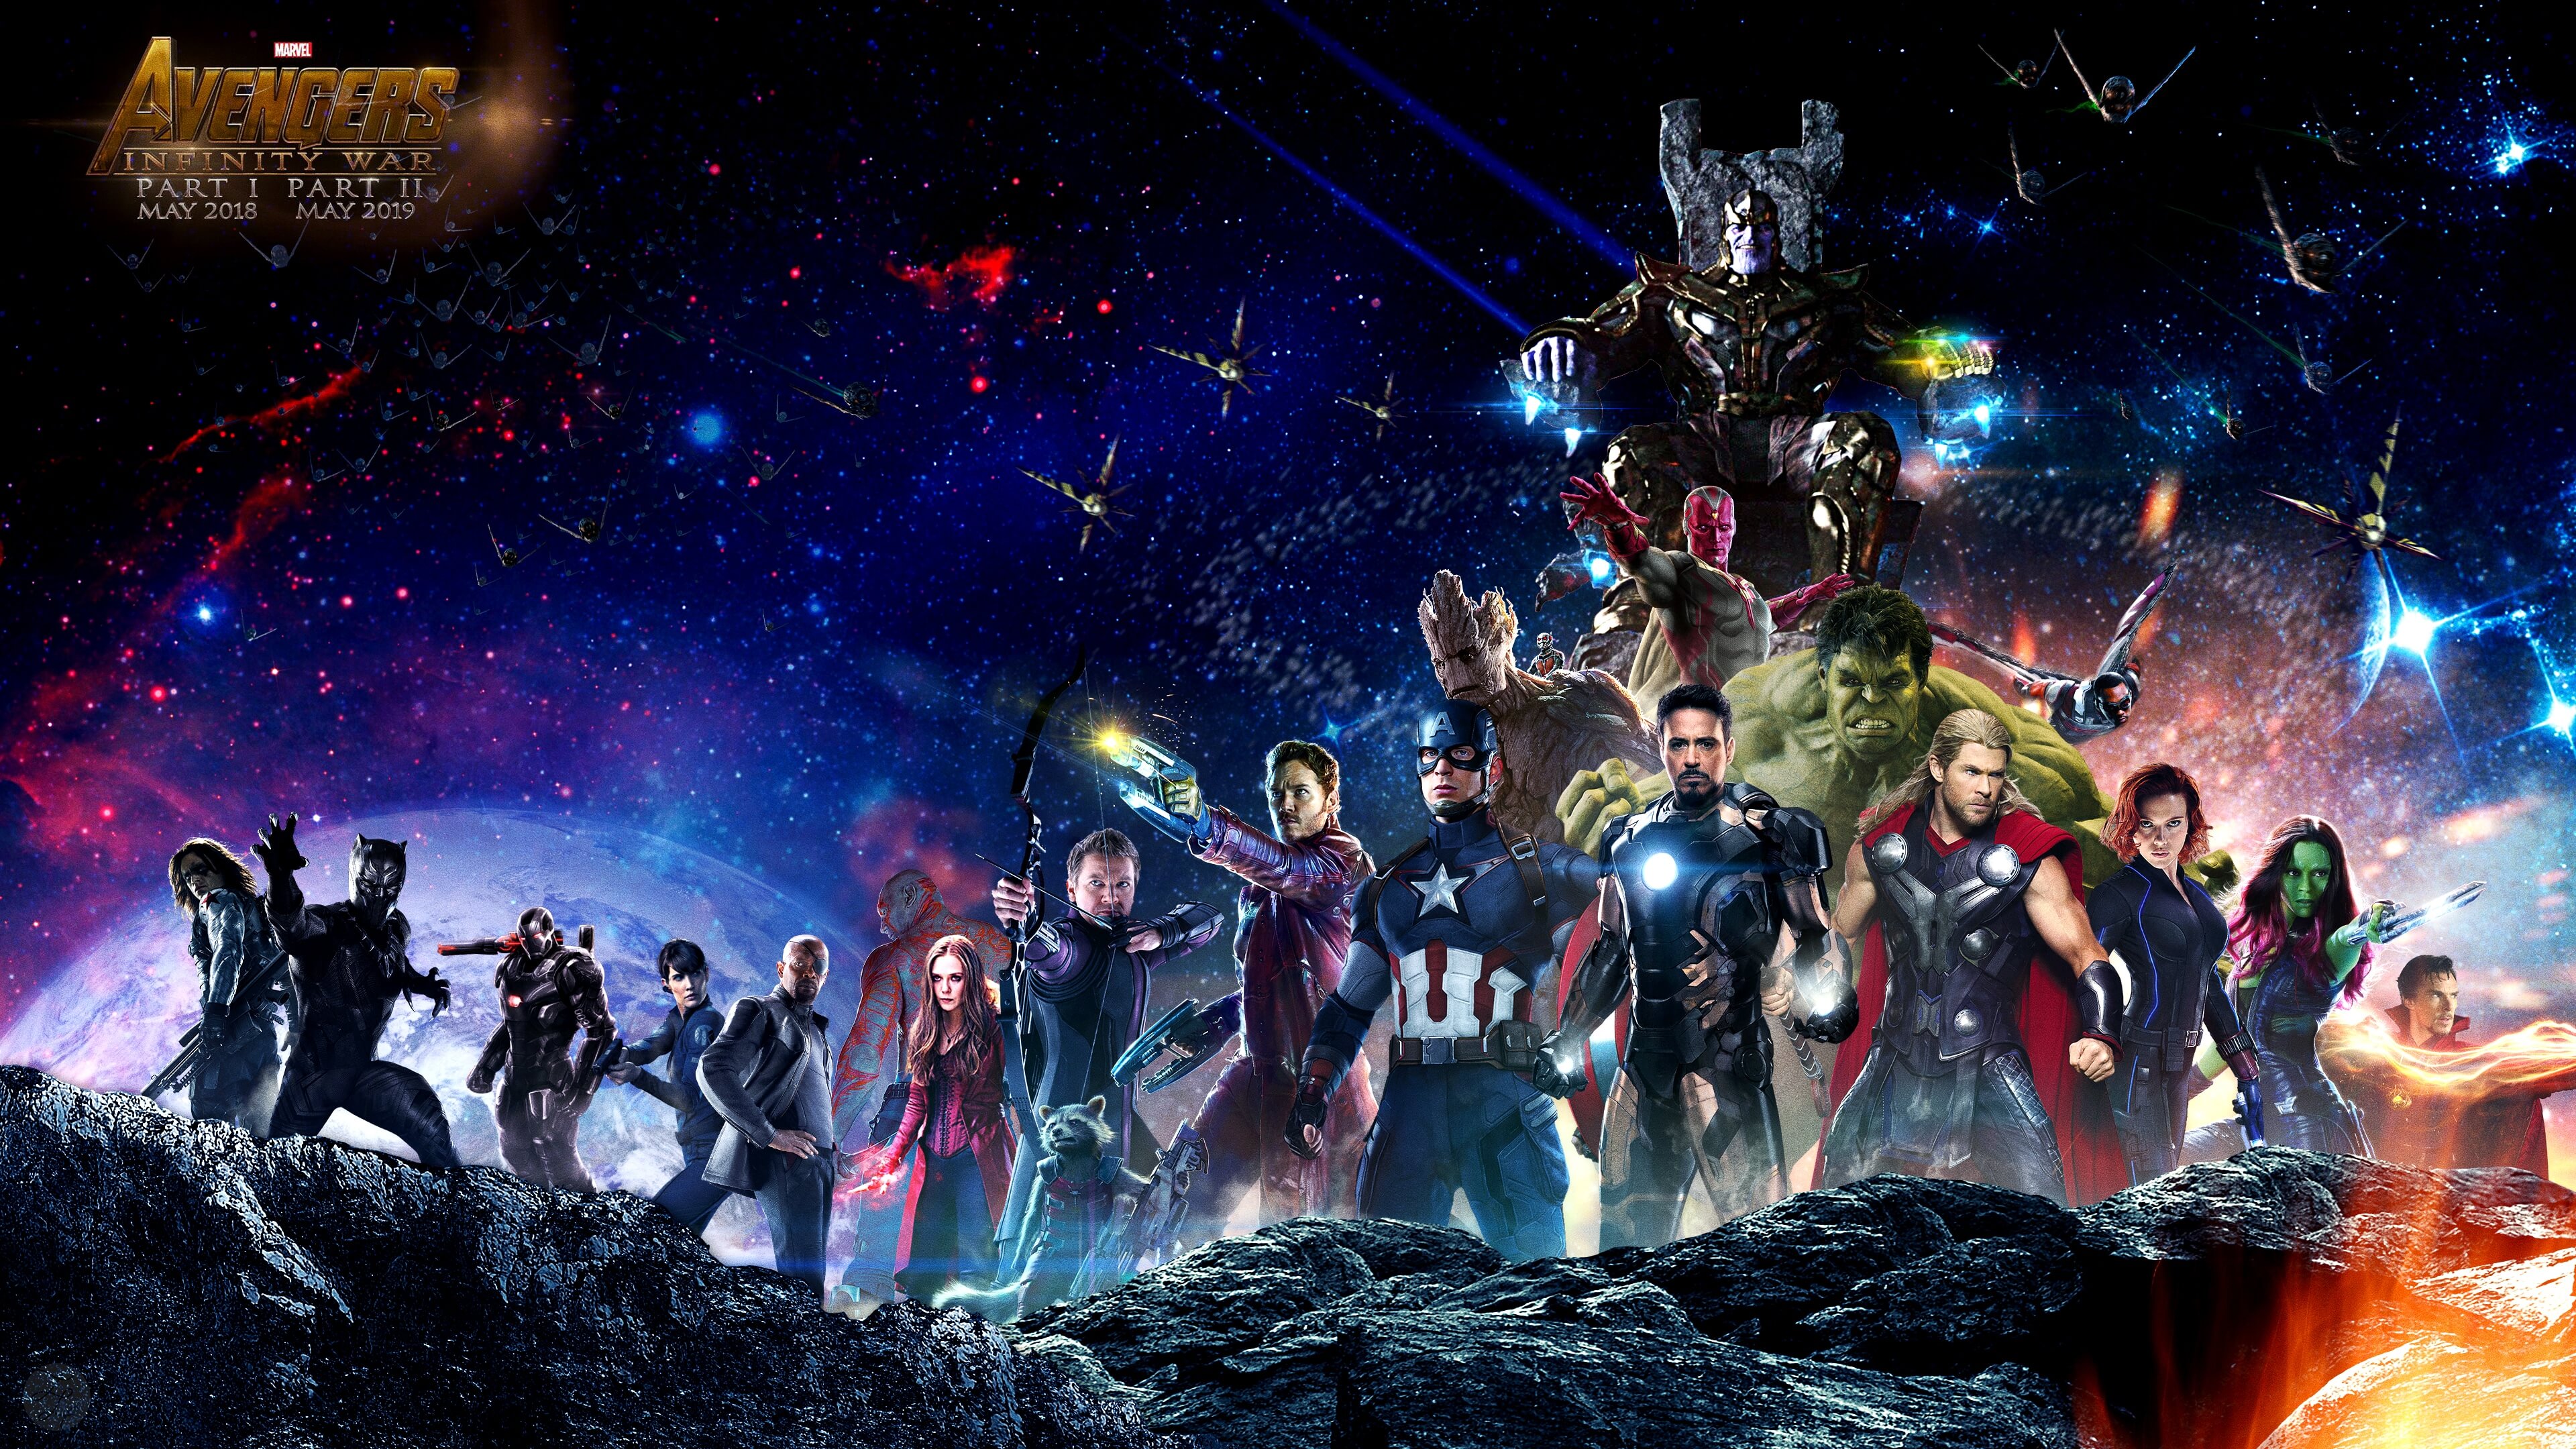 Avengers Infinity War 4K Desktop Wallpaper 917 3840x2160 px Picky